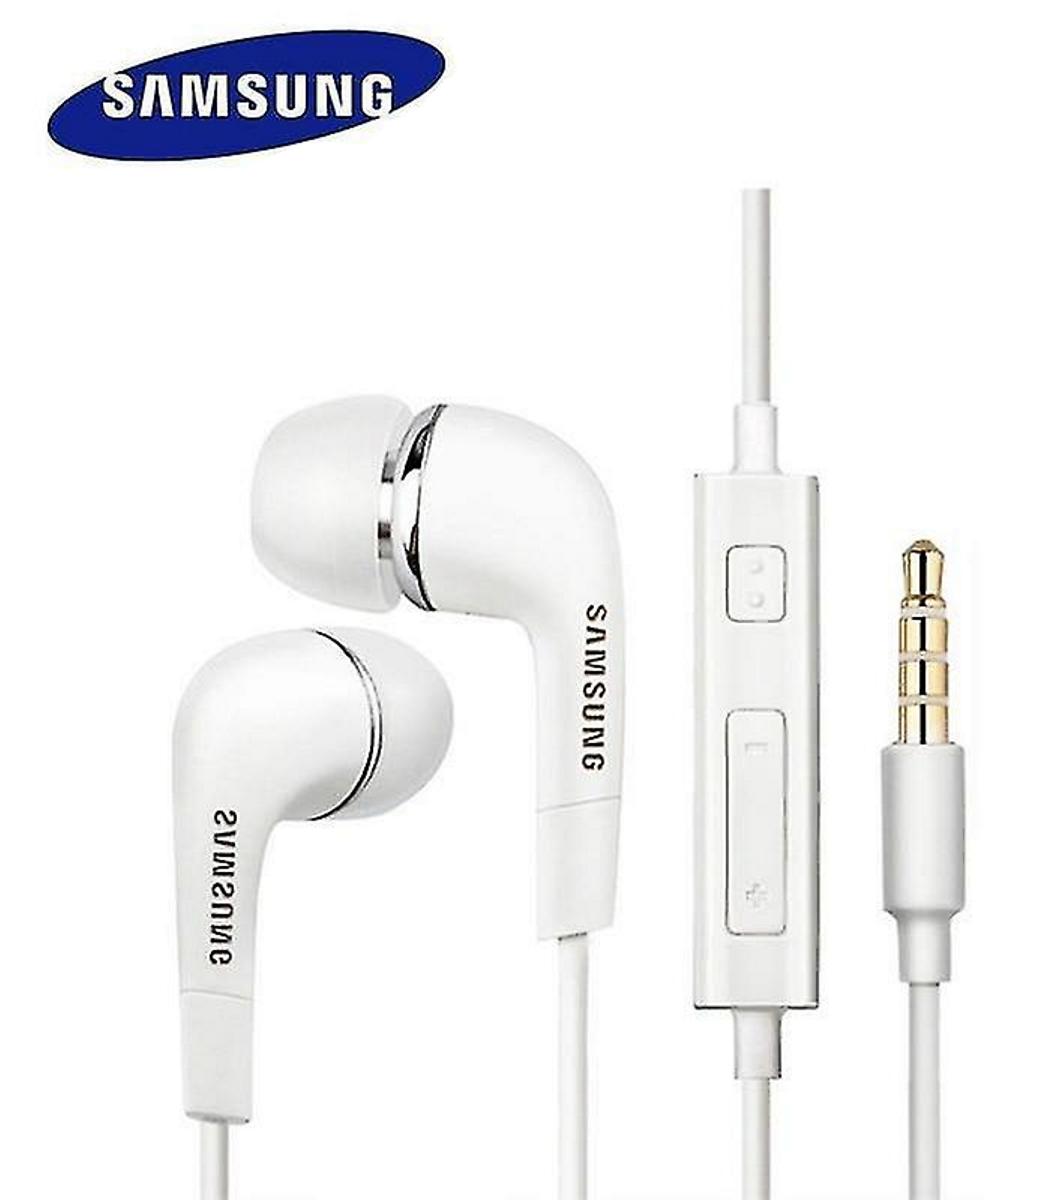 Slúchadlá Samsung EH64 handsfree, biela, 3,5 mm jack. Nové. - TV, audio, video